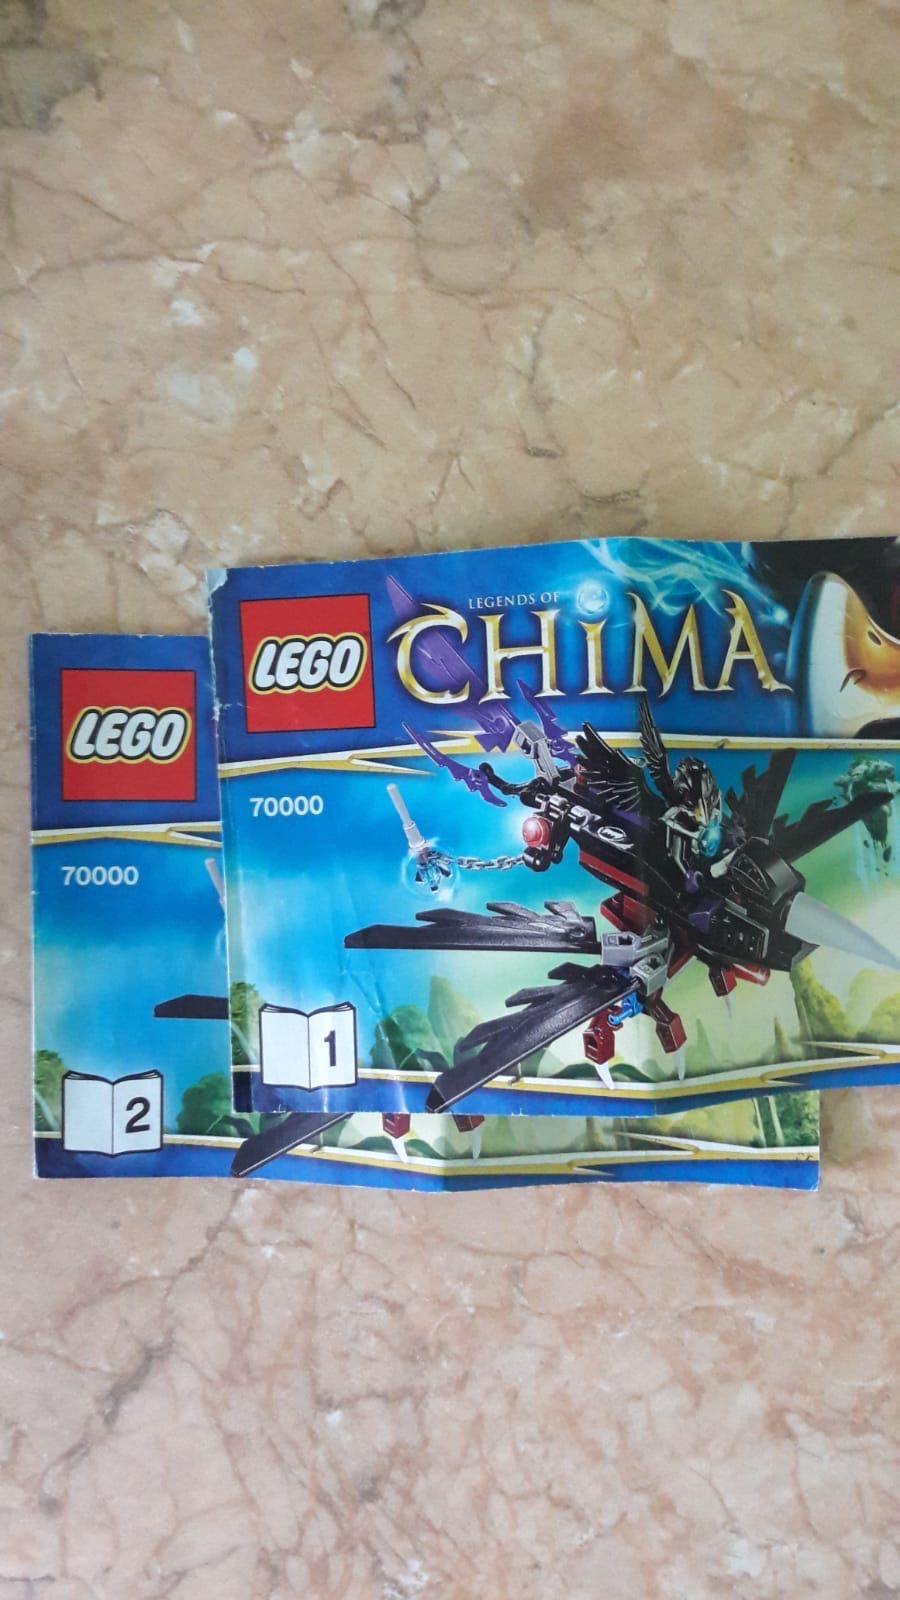 Klocki Lego Chima